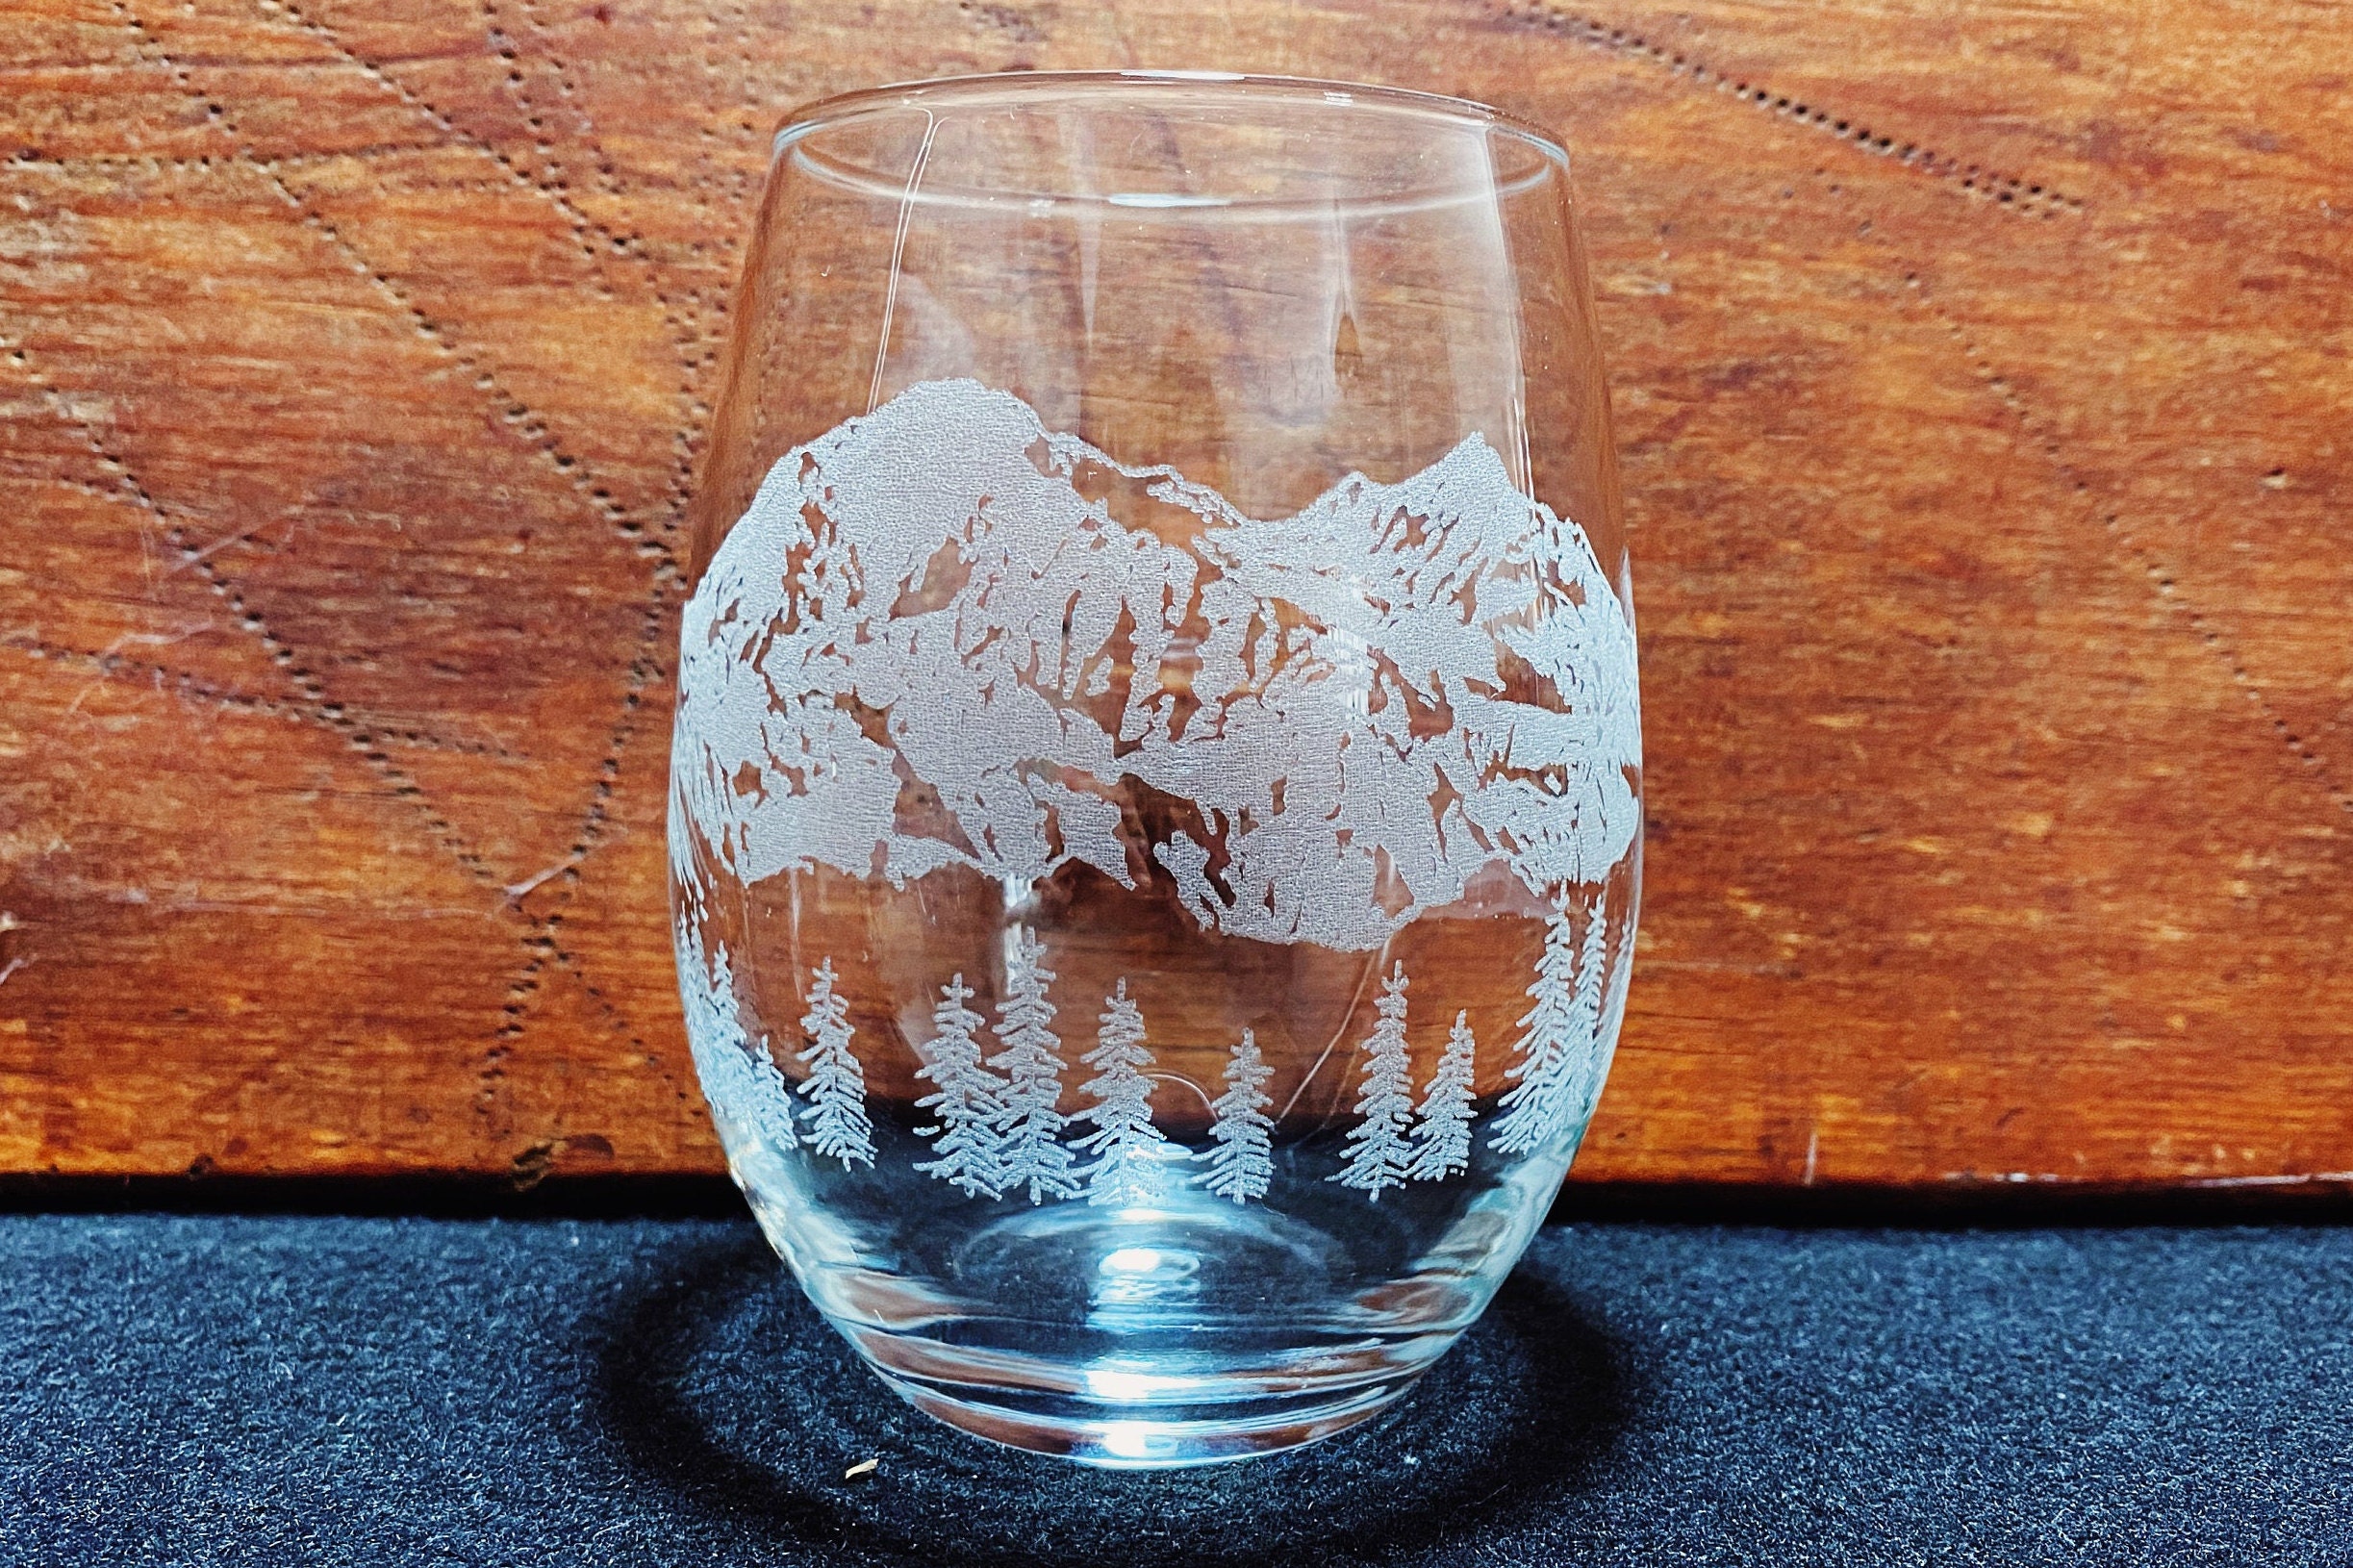 The Tetons Grand Teton Wyoming Grand Teton Mountain Range Engraved Crystal  Stemless Wine Glass 1 Single Wine Glass 